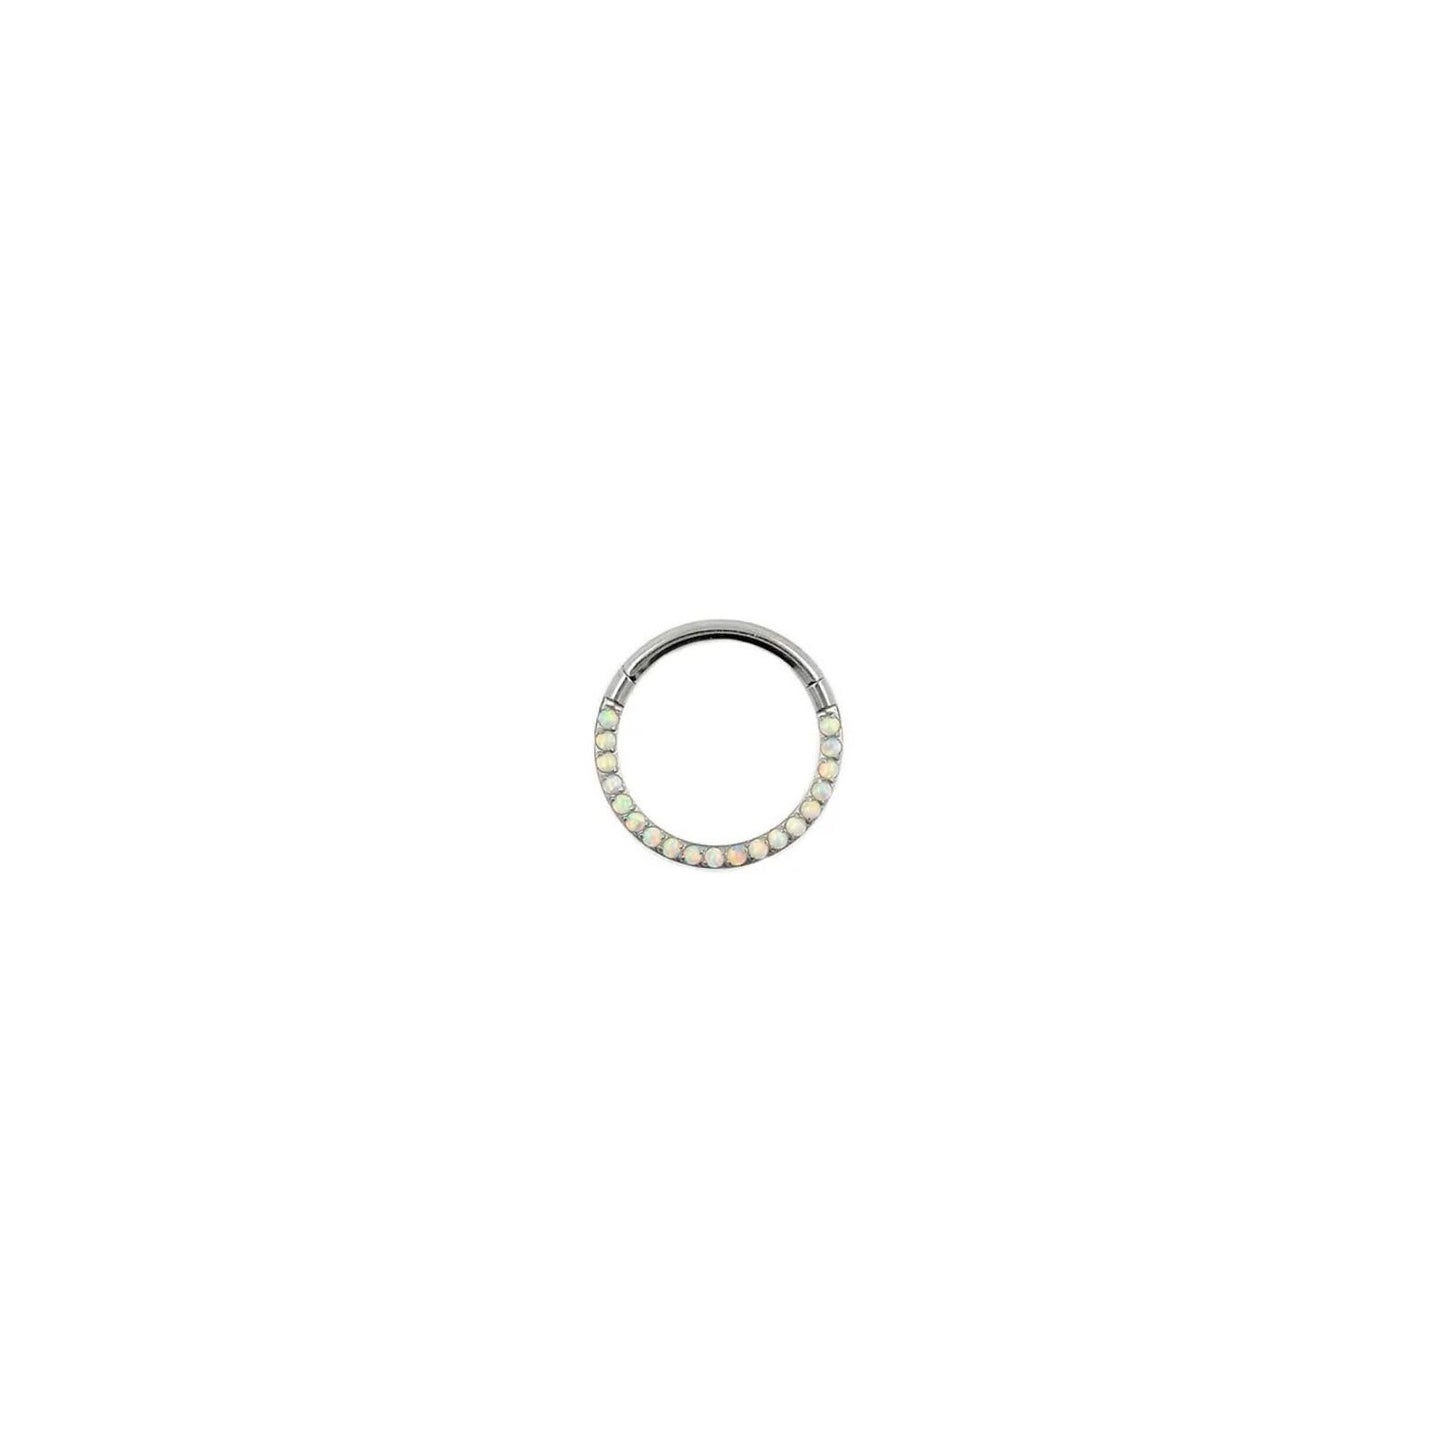 Argolla titanio ASTM F136 - Segment ring con línea de ópalos frontal blanco